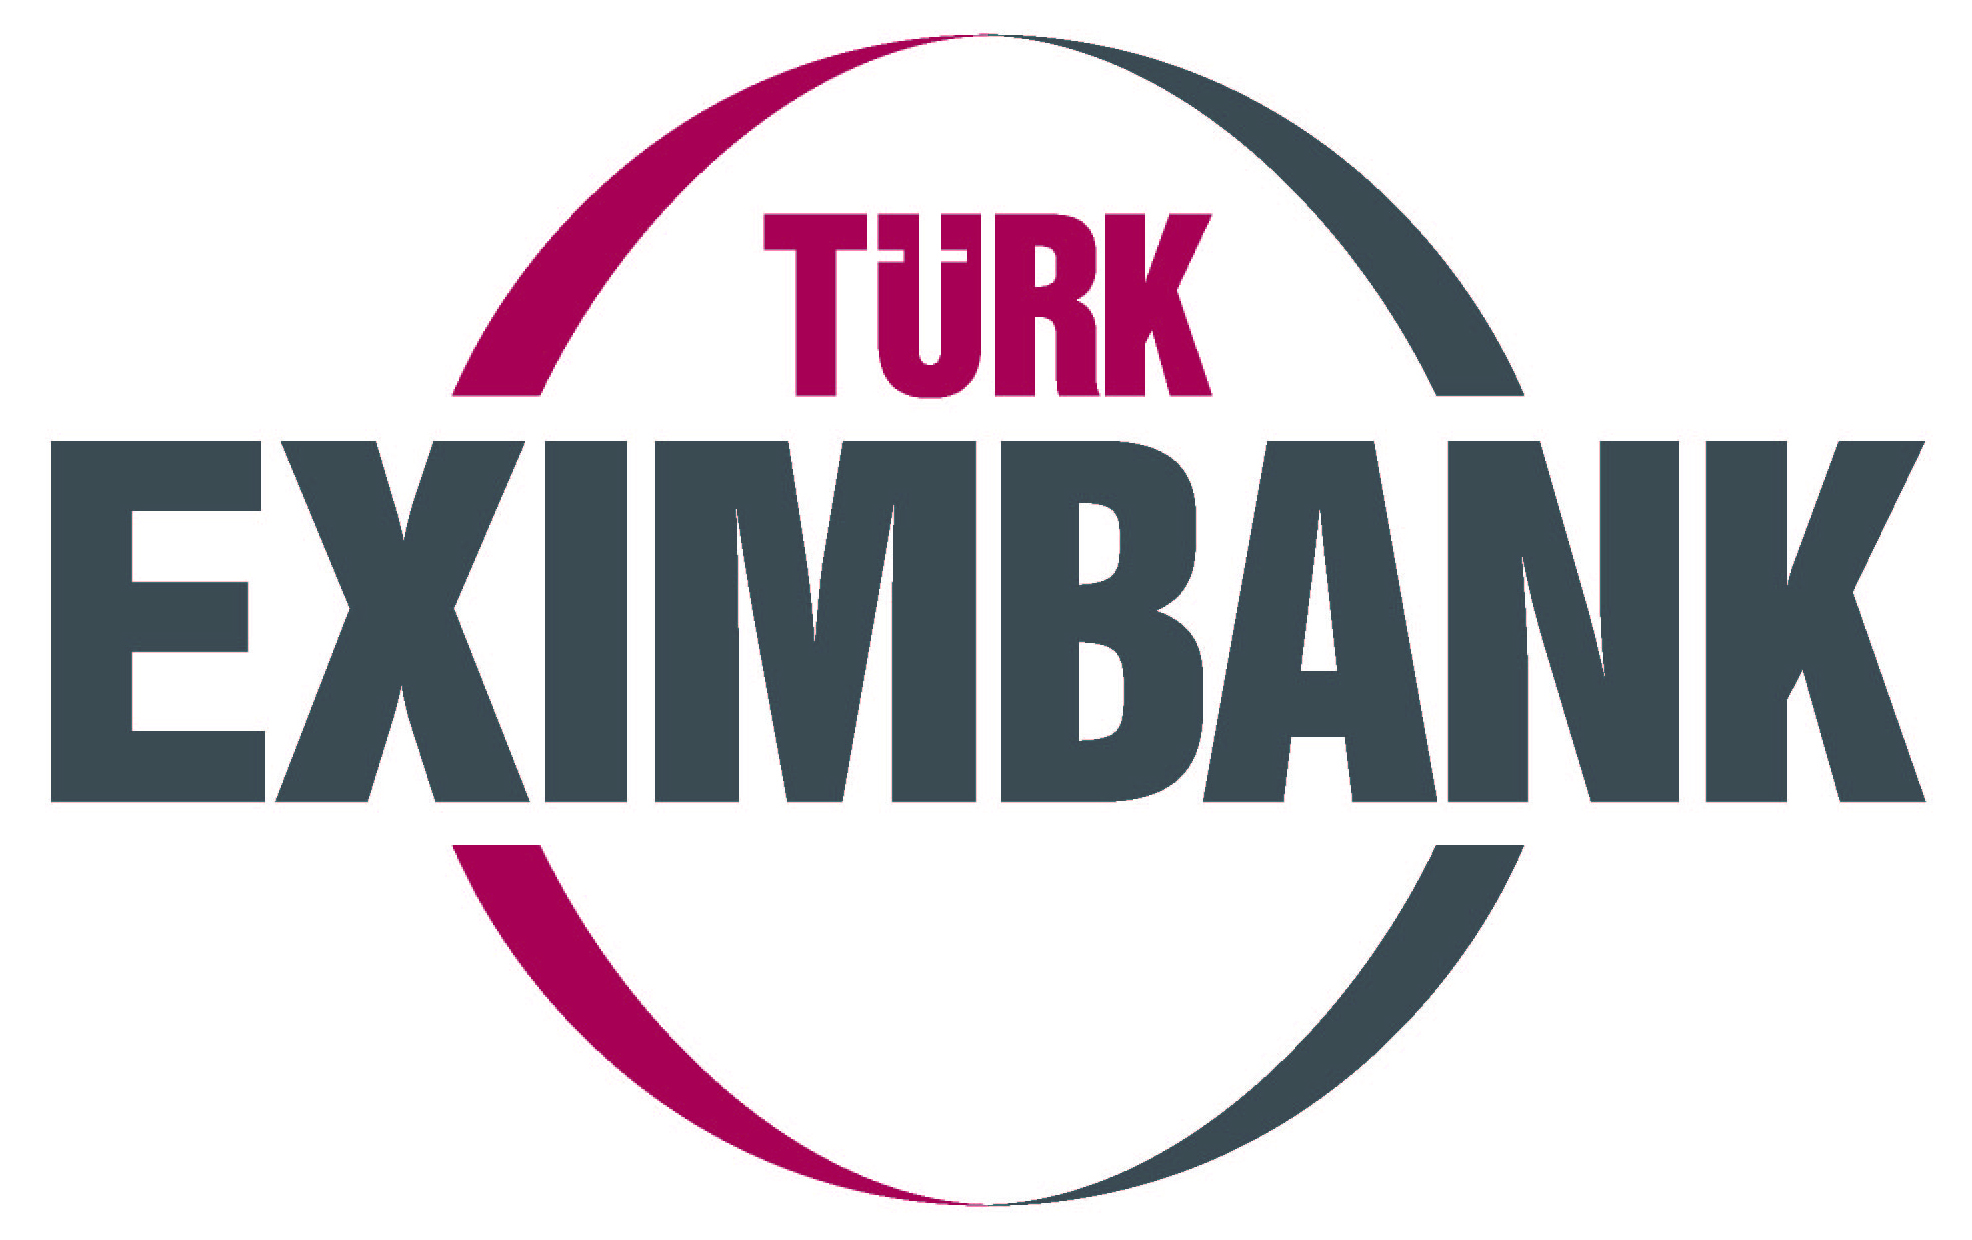 Eximbank md. Eximbank. Логотип Exim. Эксимбанк логотип. Türk Eximbank карта.